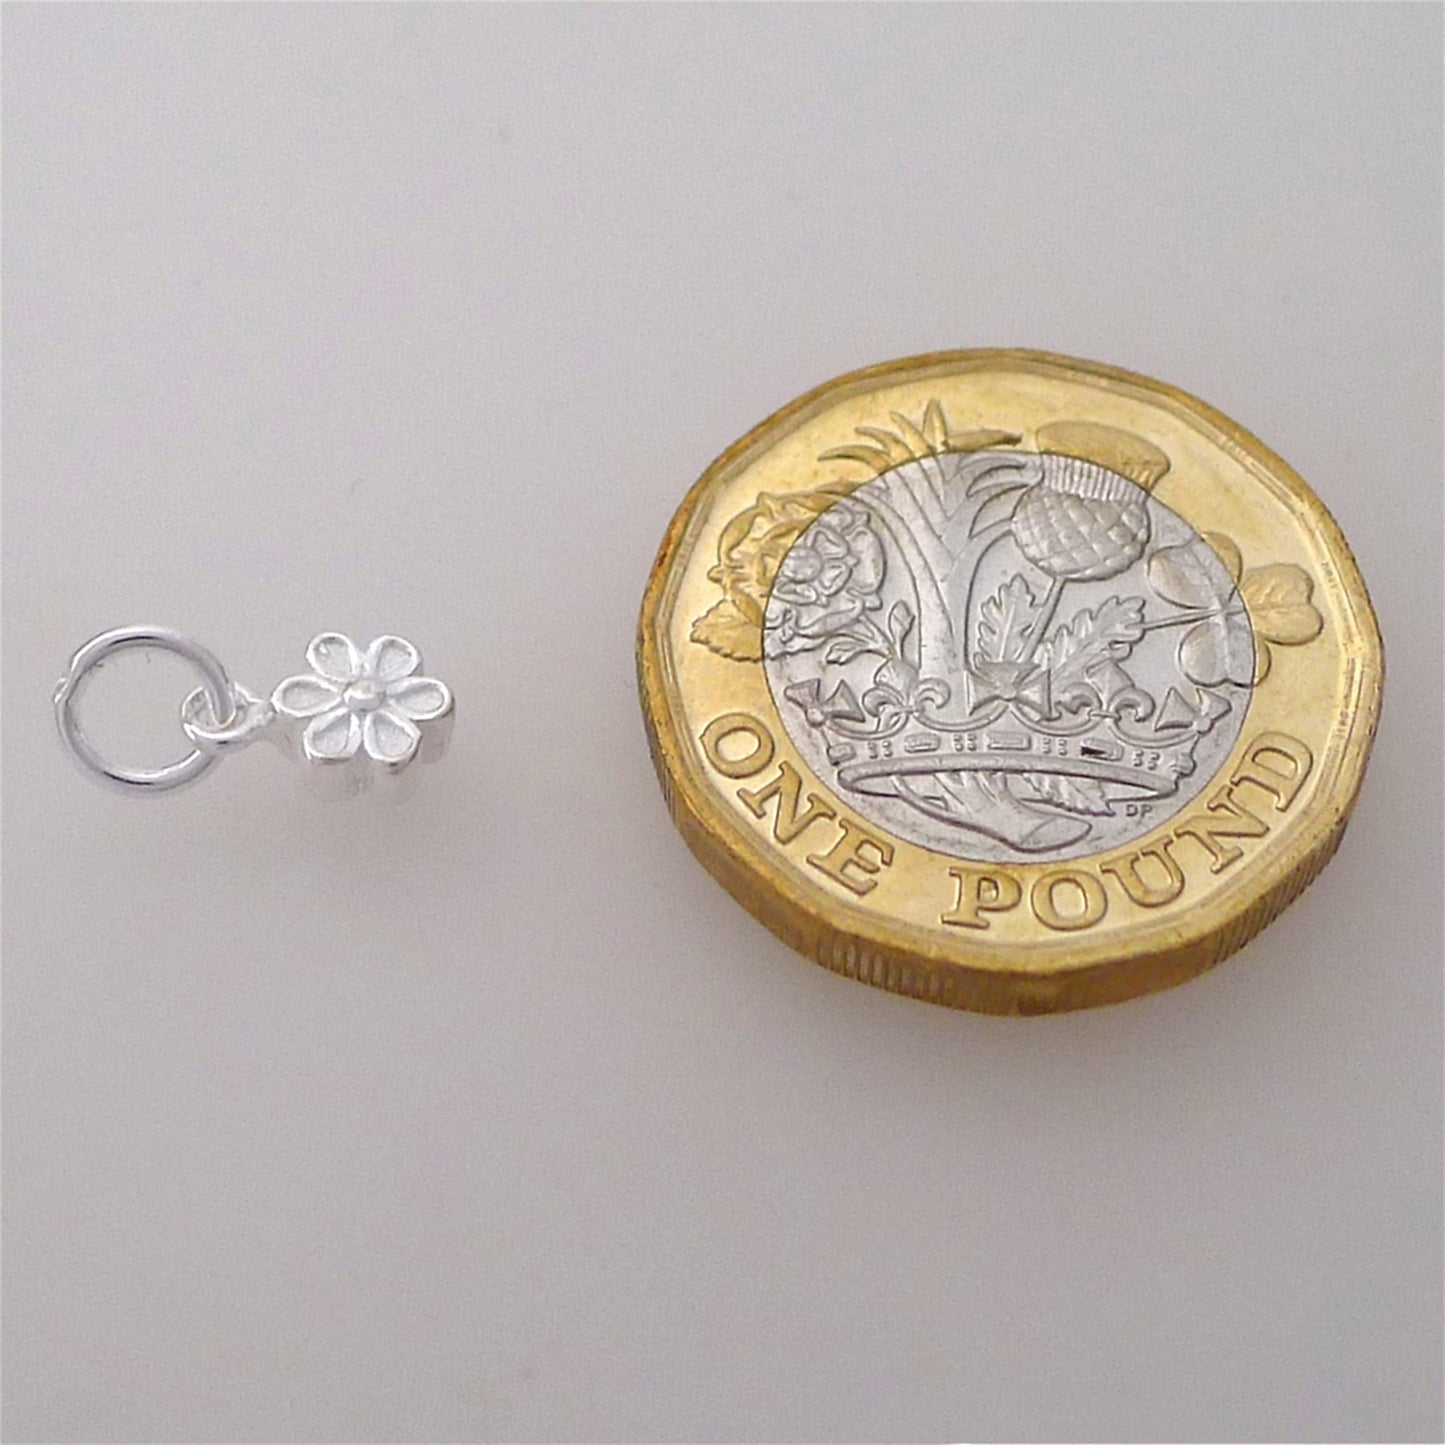 2 Sterling Silver Flower Daisy Charm Pendants for Necklace or Bracelet - sugarkittenlondon